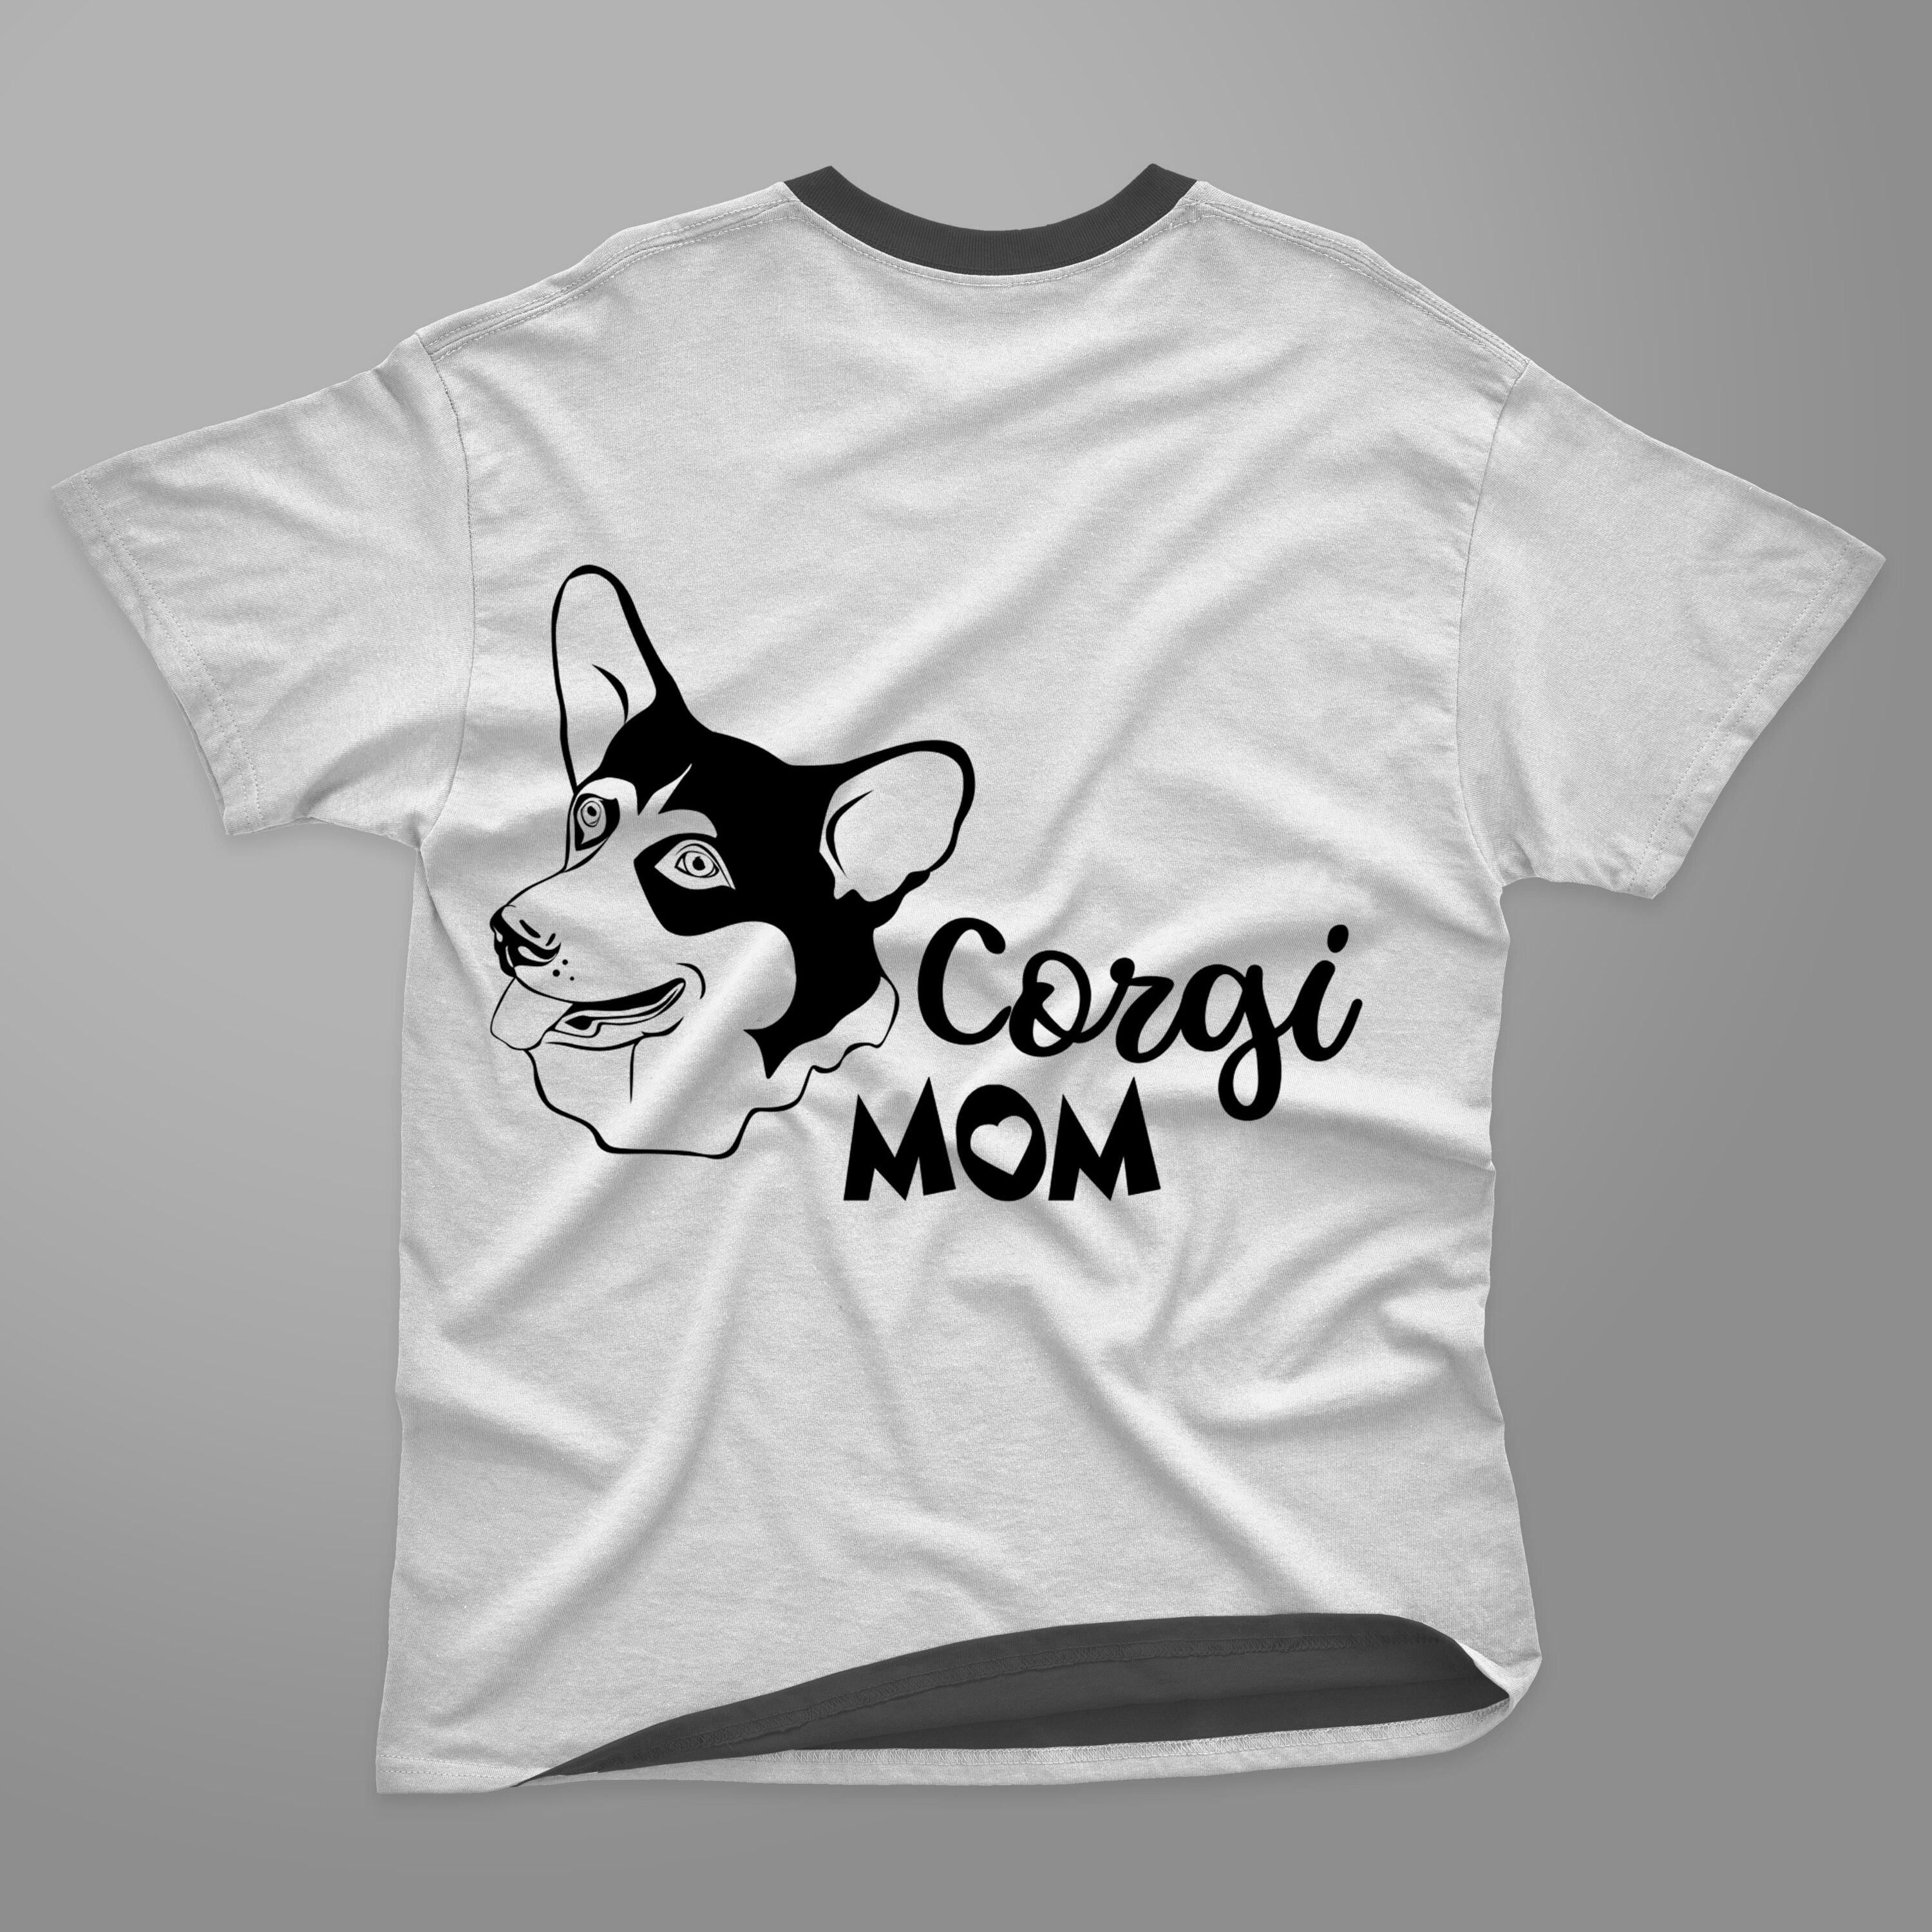 Bicolor corgi face on a white t-shirt.